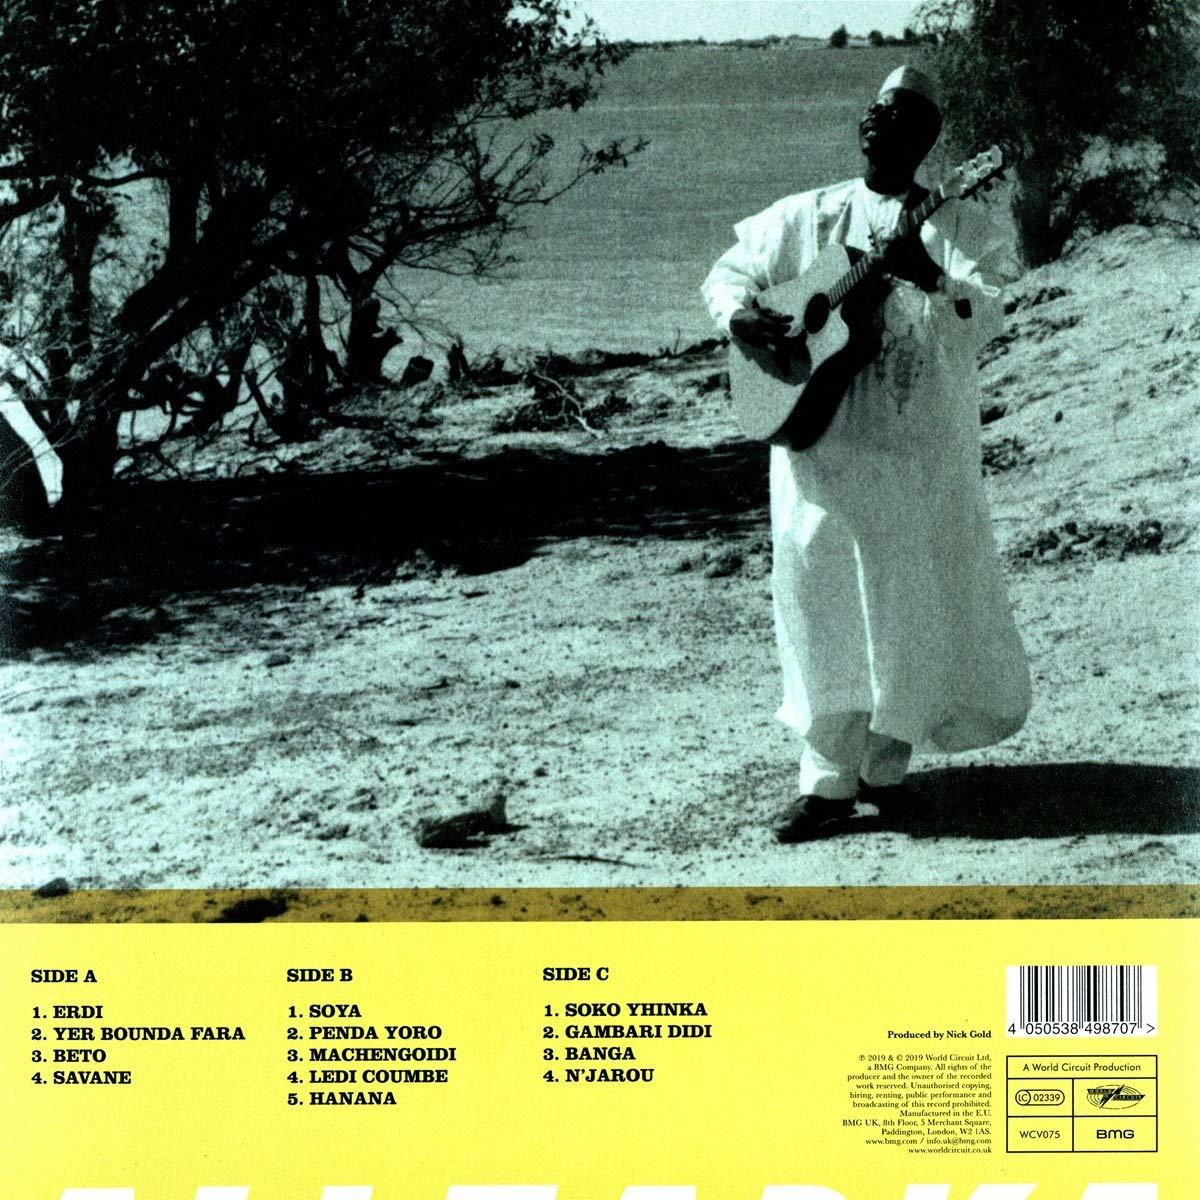 SAVANE - Farka - -REMAST- Touré Ali (Vinyl)